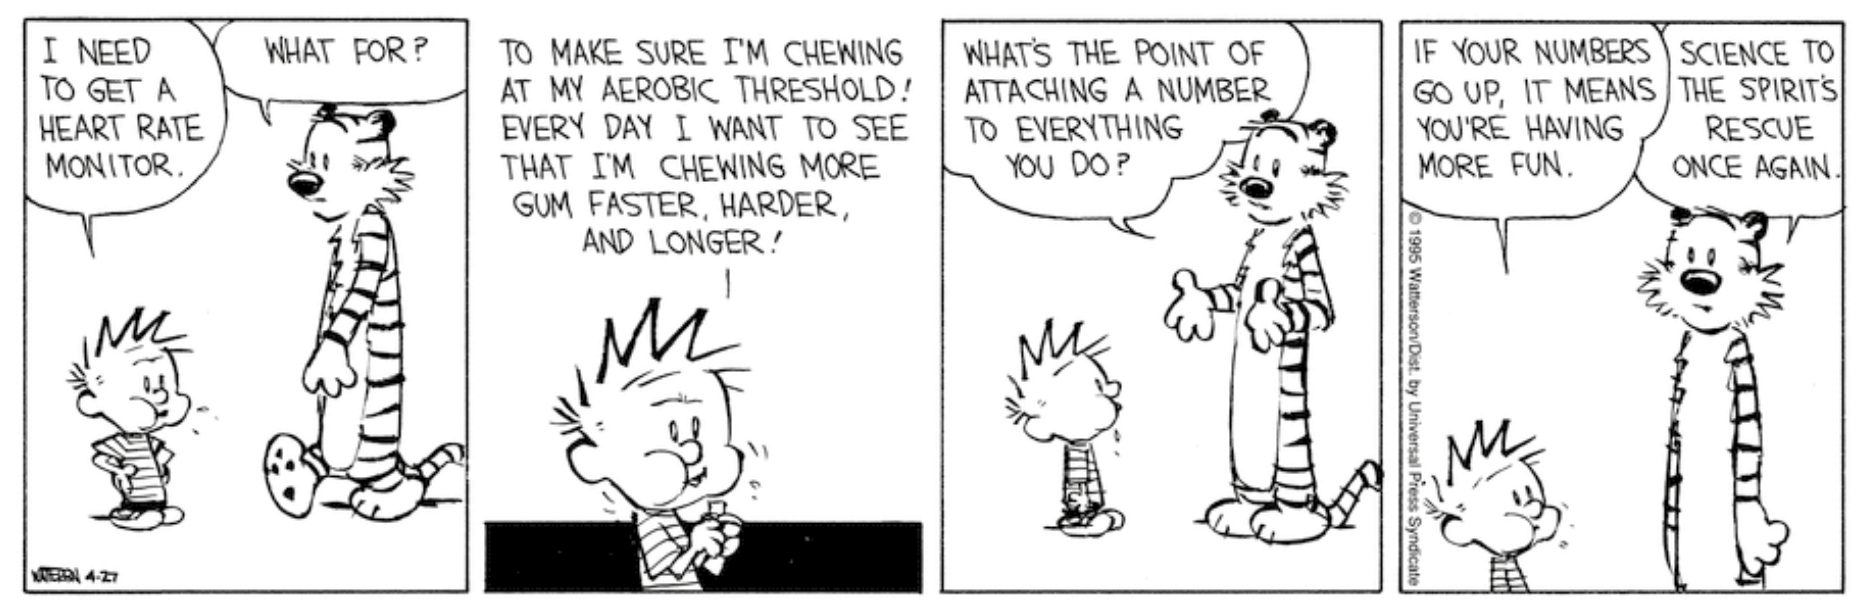 A Calvin and Hobbes comic strip